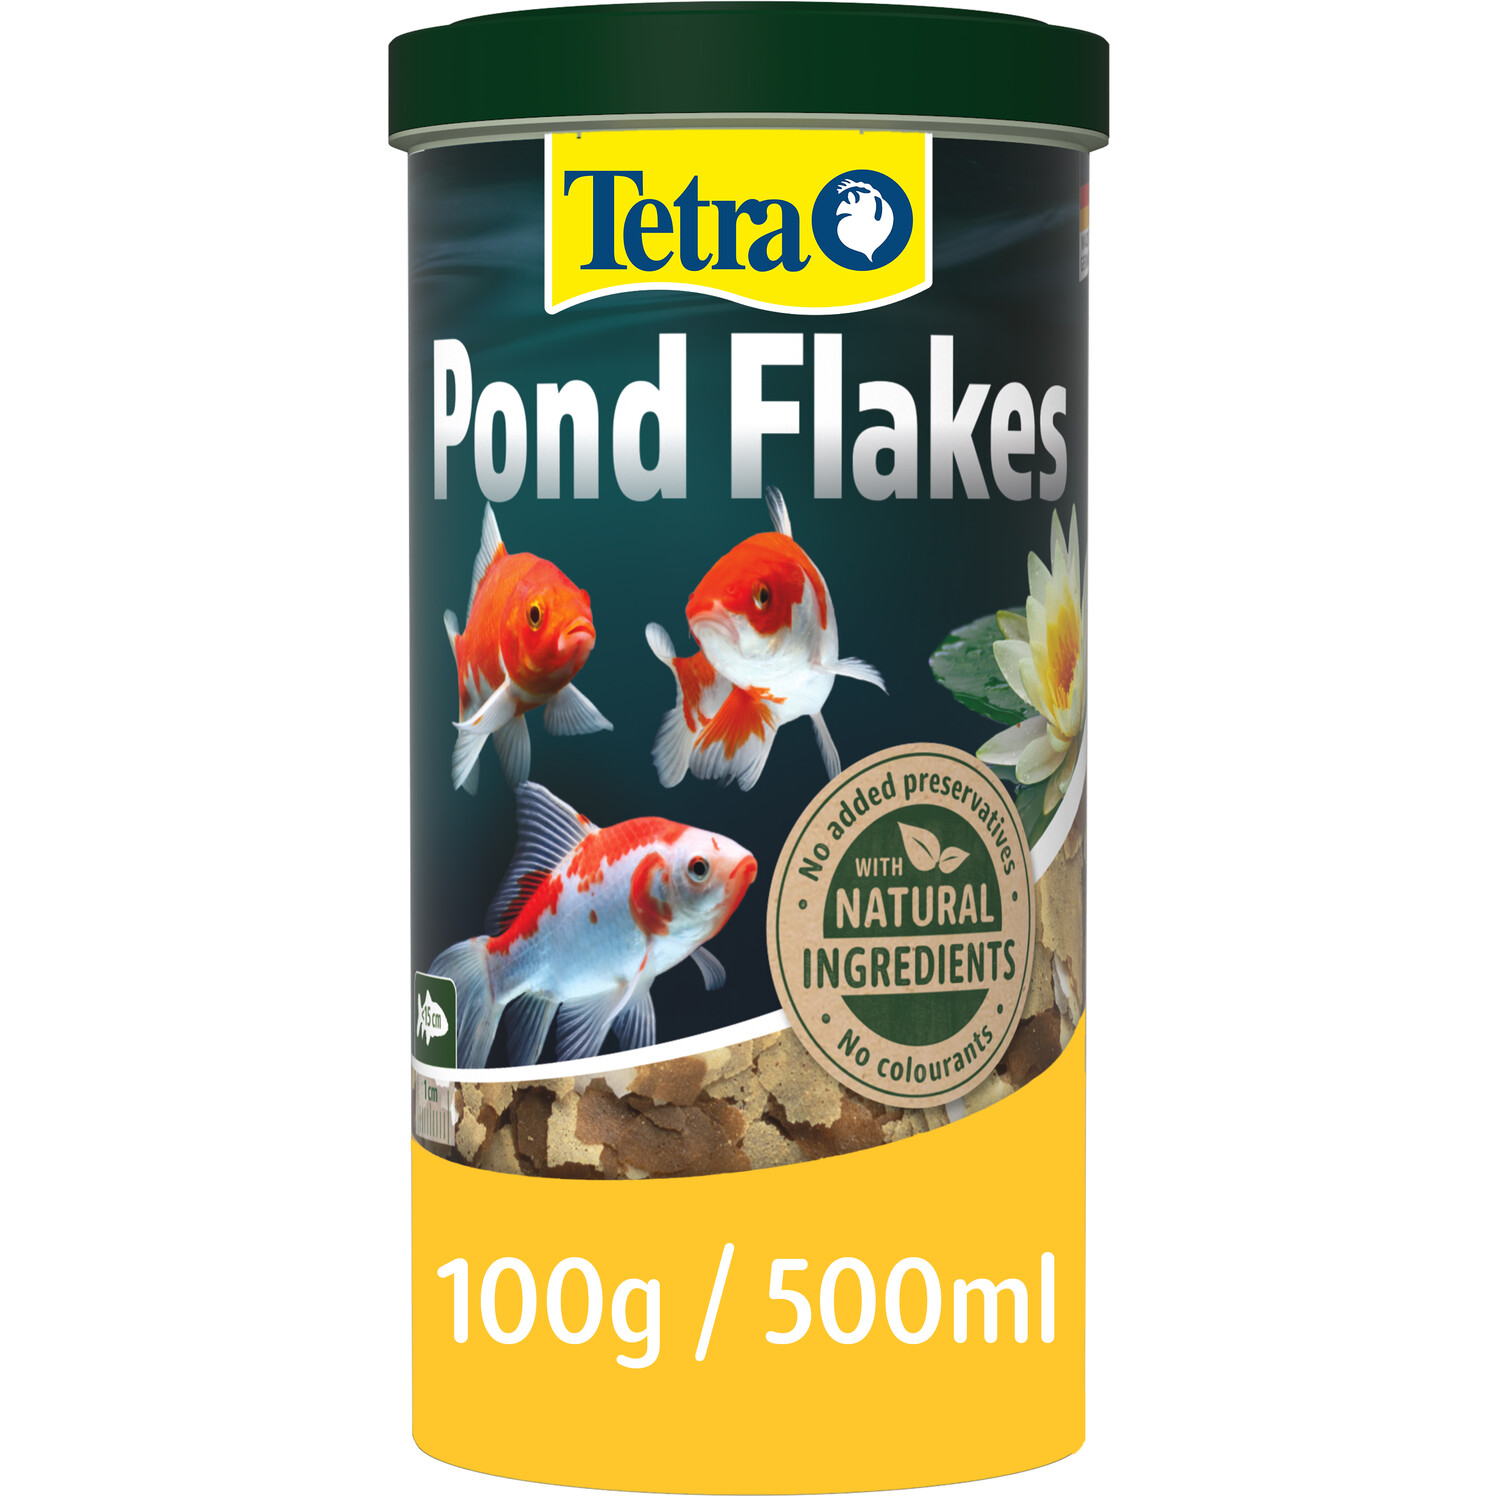 Tetra Pond Flakes Image